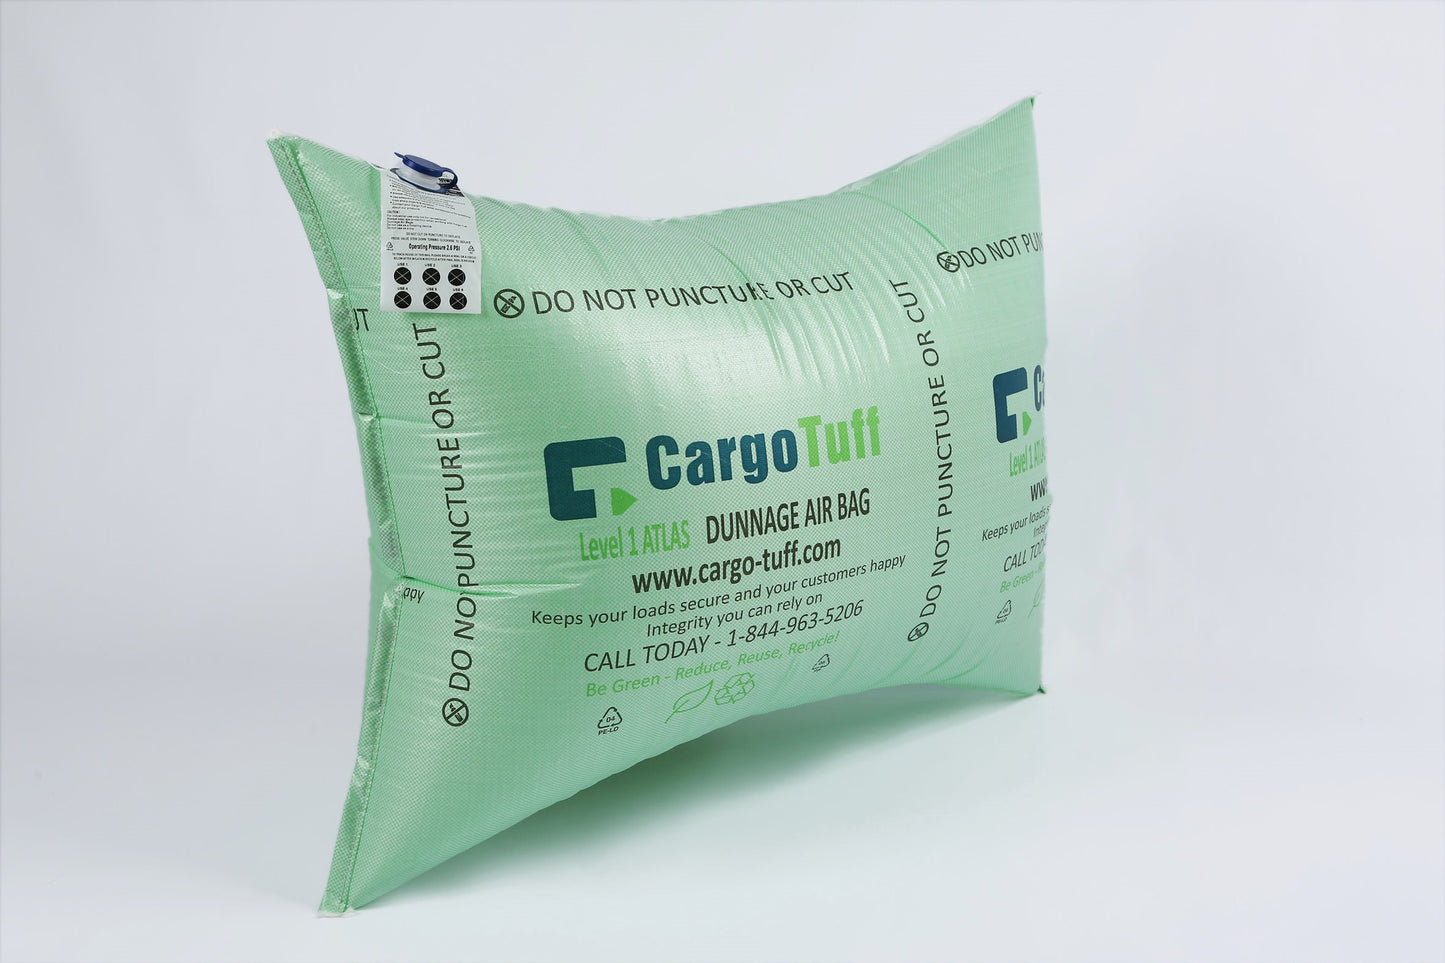 Level 1 36x66 Woven Polypropylene CargoTuff Dunnage Bag (10 pcs per box)